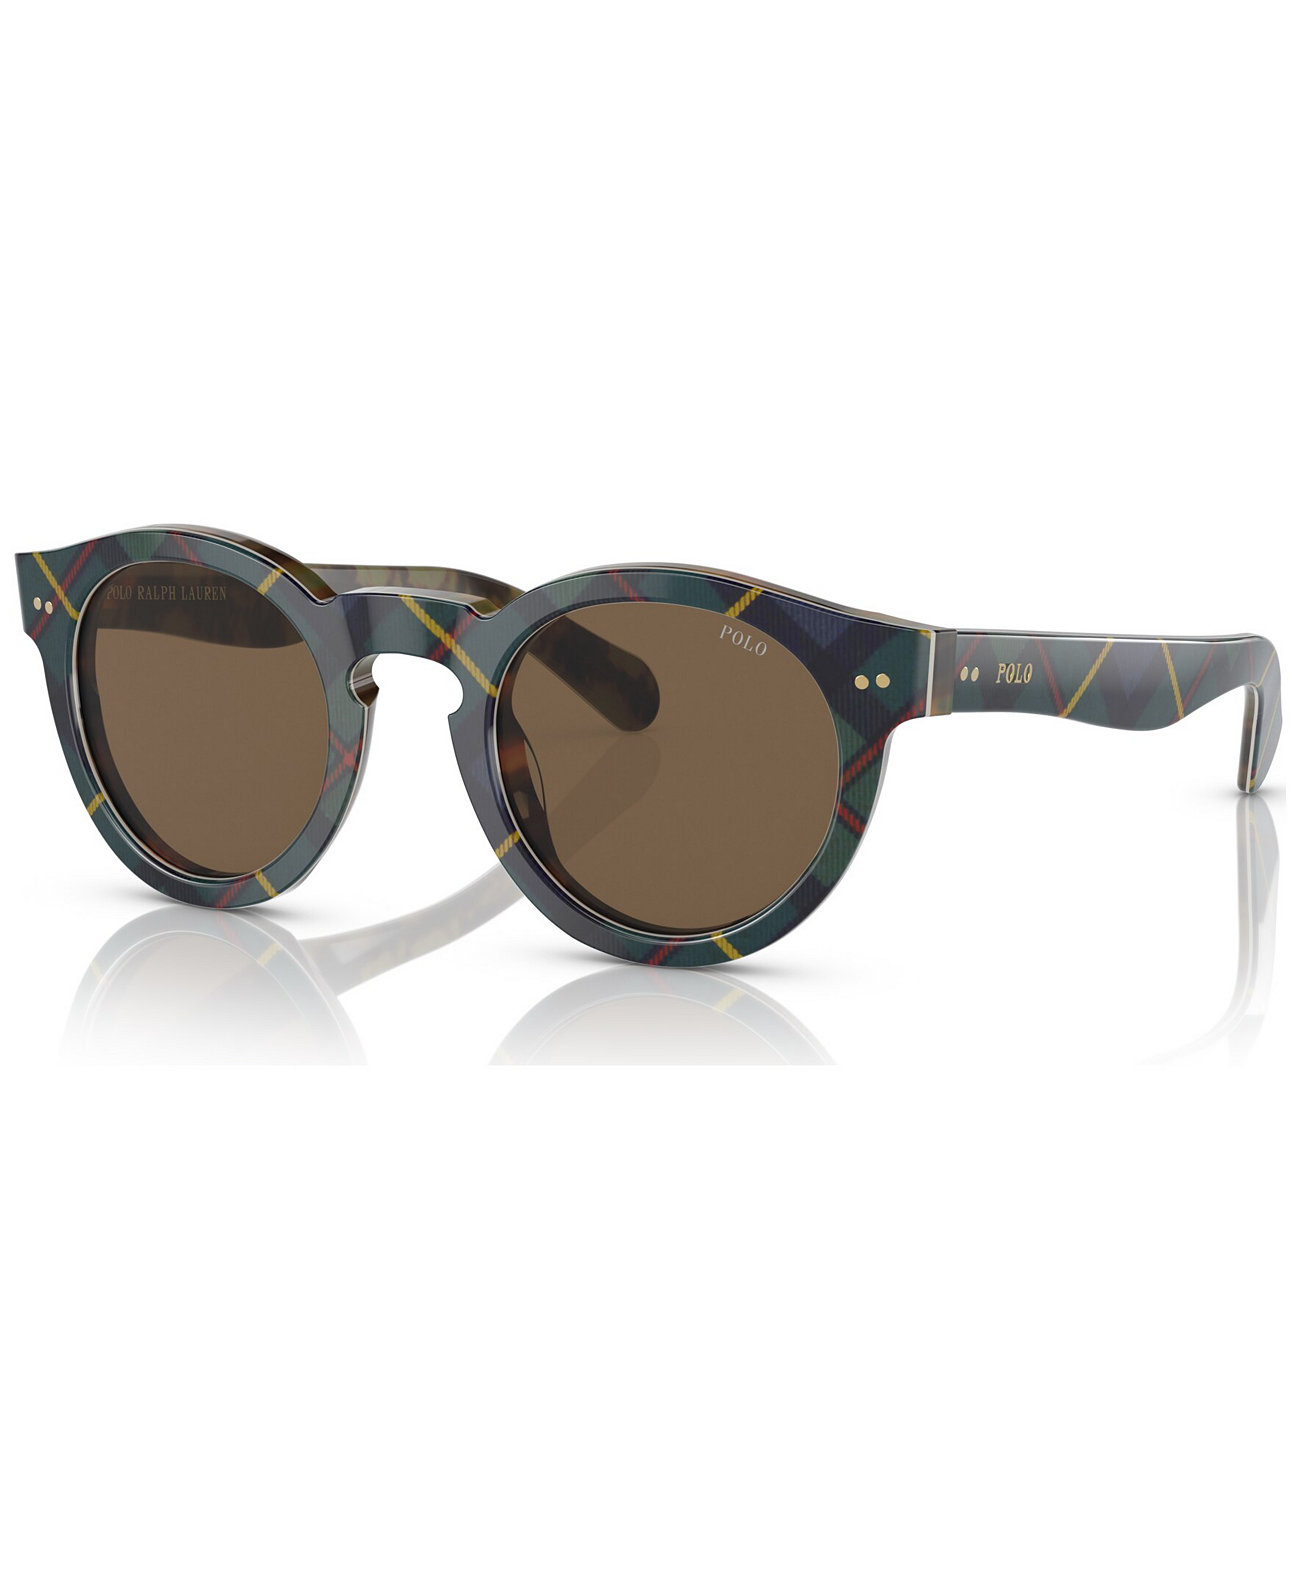 Men's Sunglasses PH4165 Polo Ralph Lauren